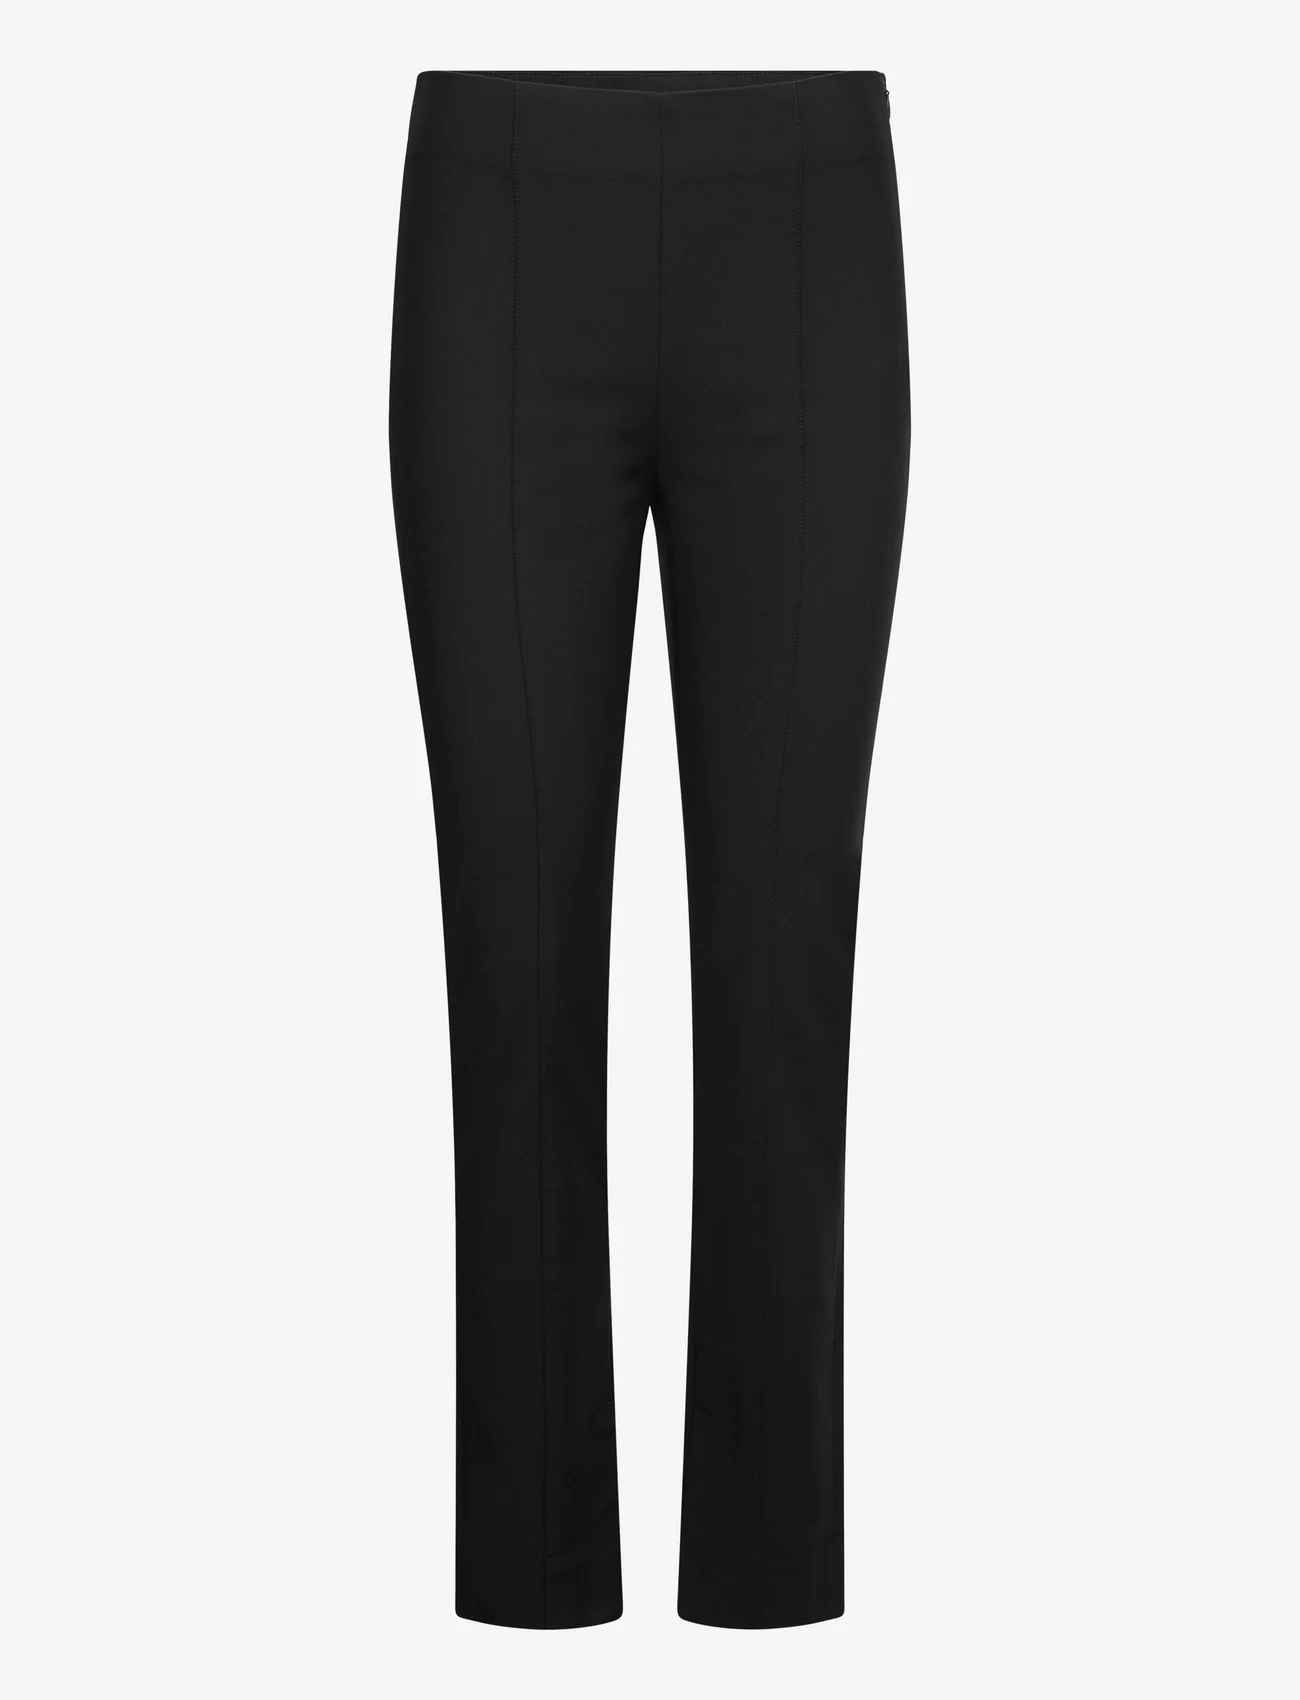 GANT - D1. PIN TUCK SLACK - trousers with skinny legs - ebony black - 0